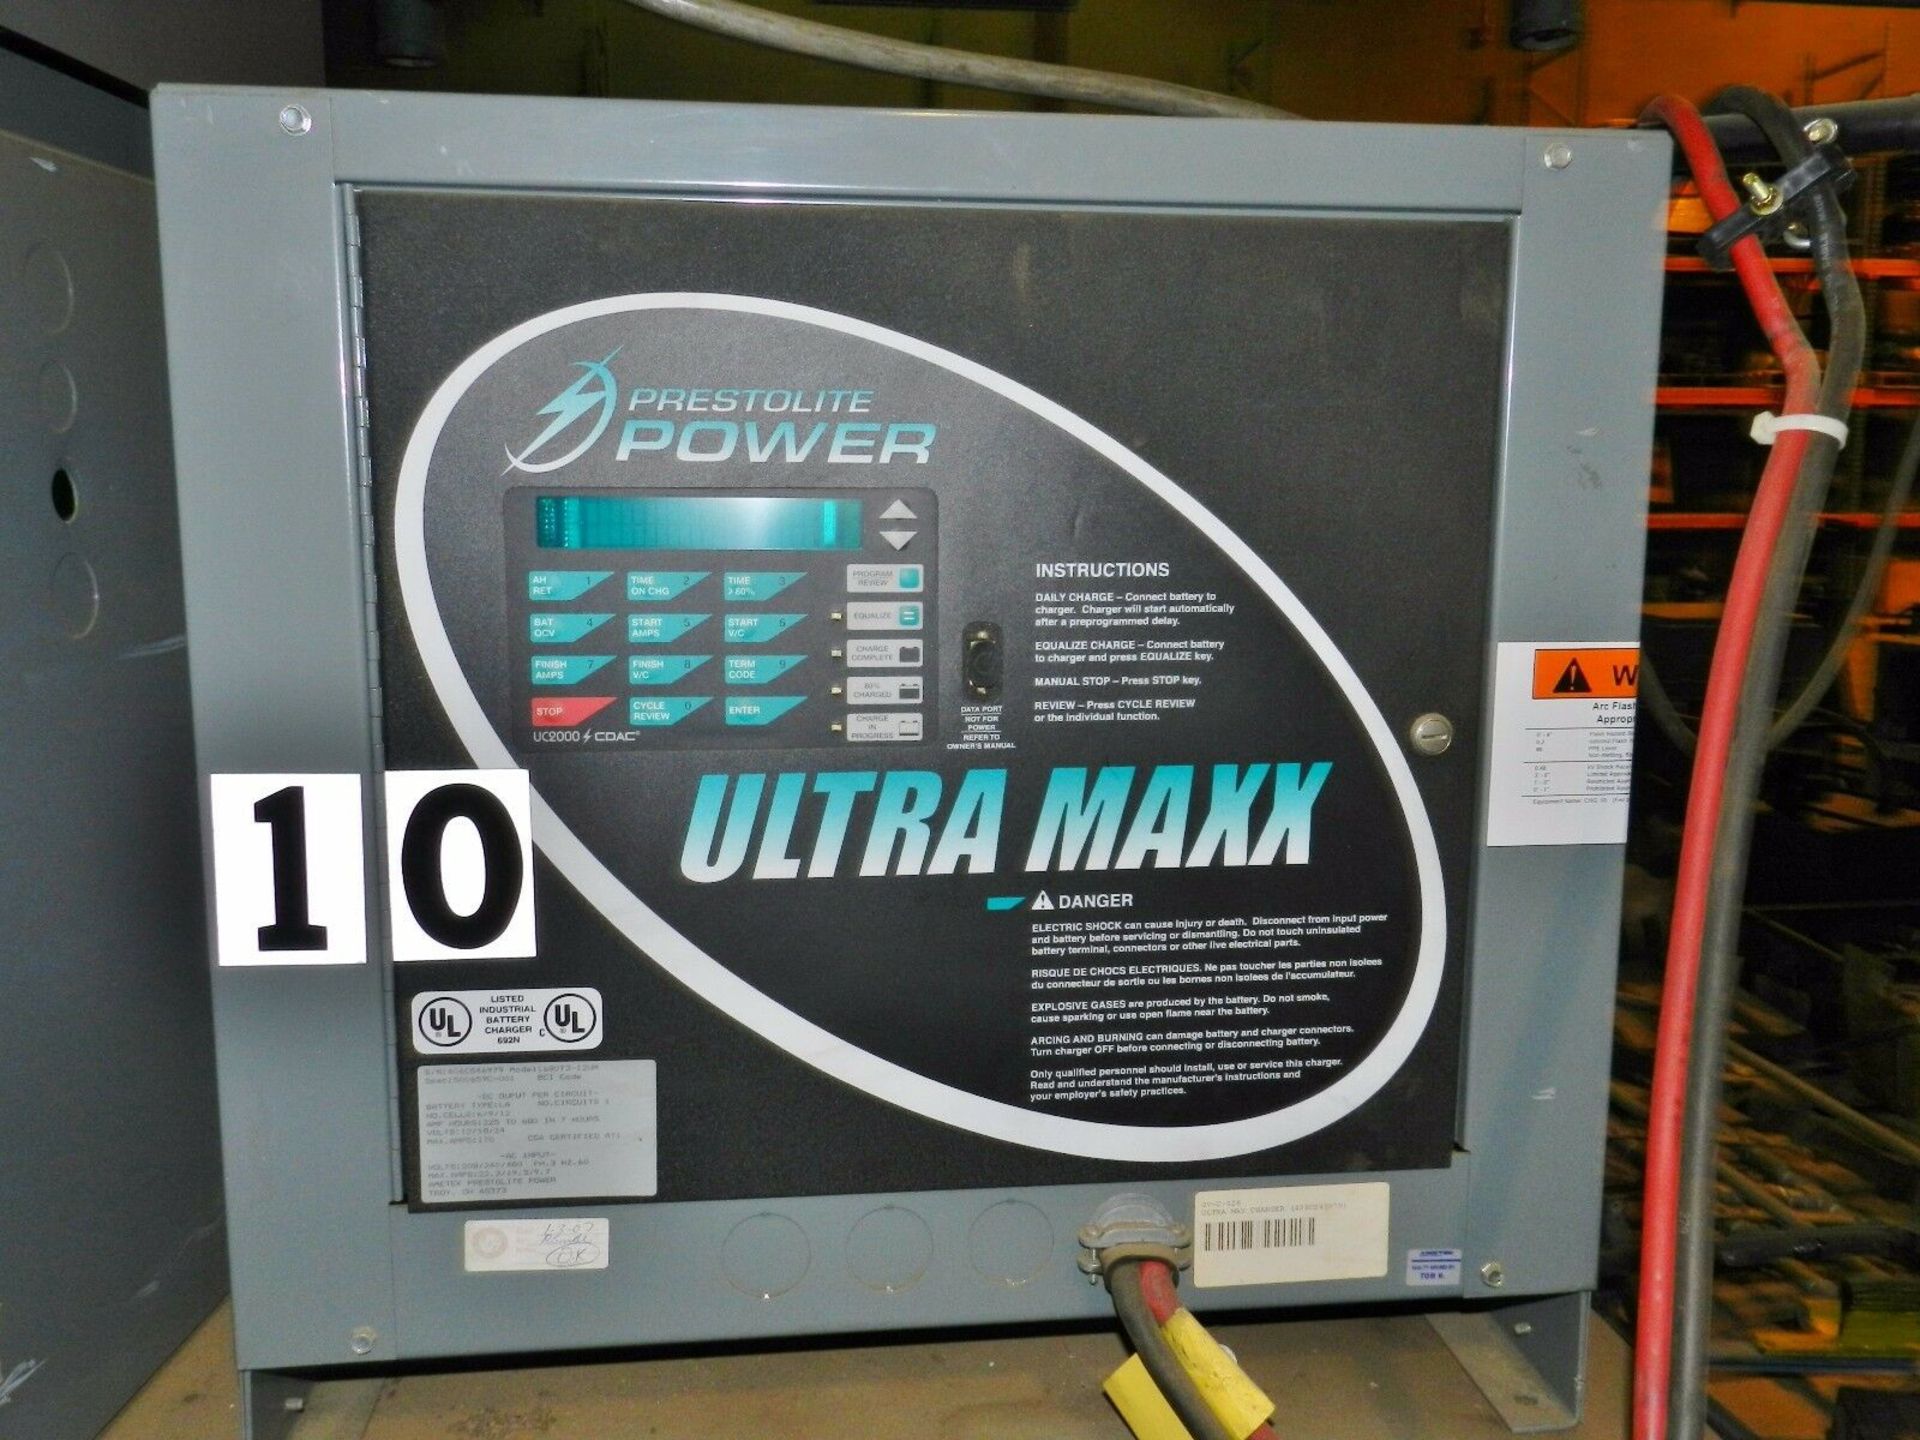 Prestolite Ultra Maxx 24 Volt Battery Charger 680T3-12UM